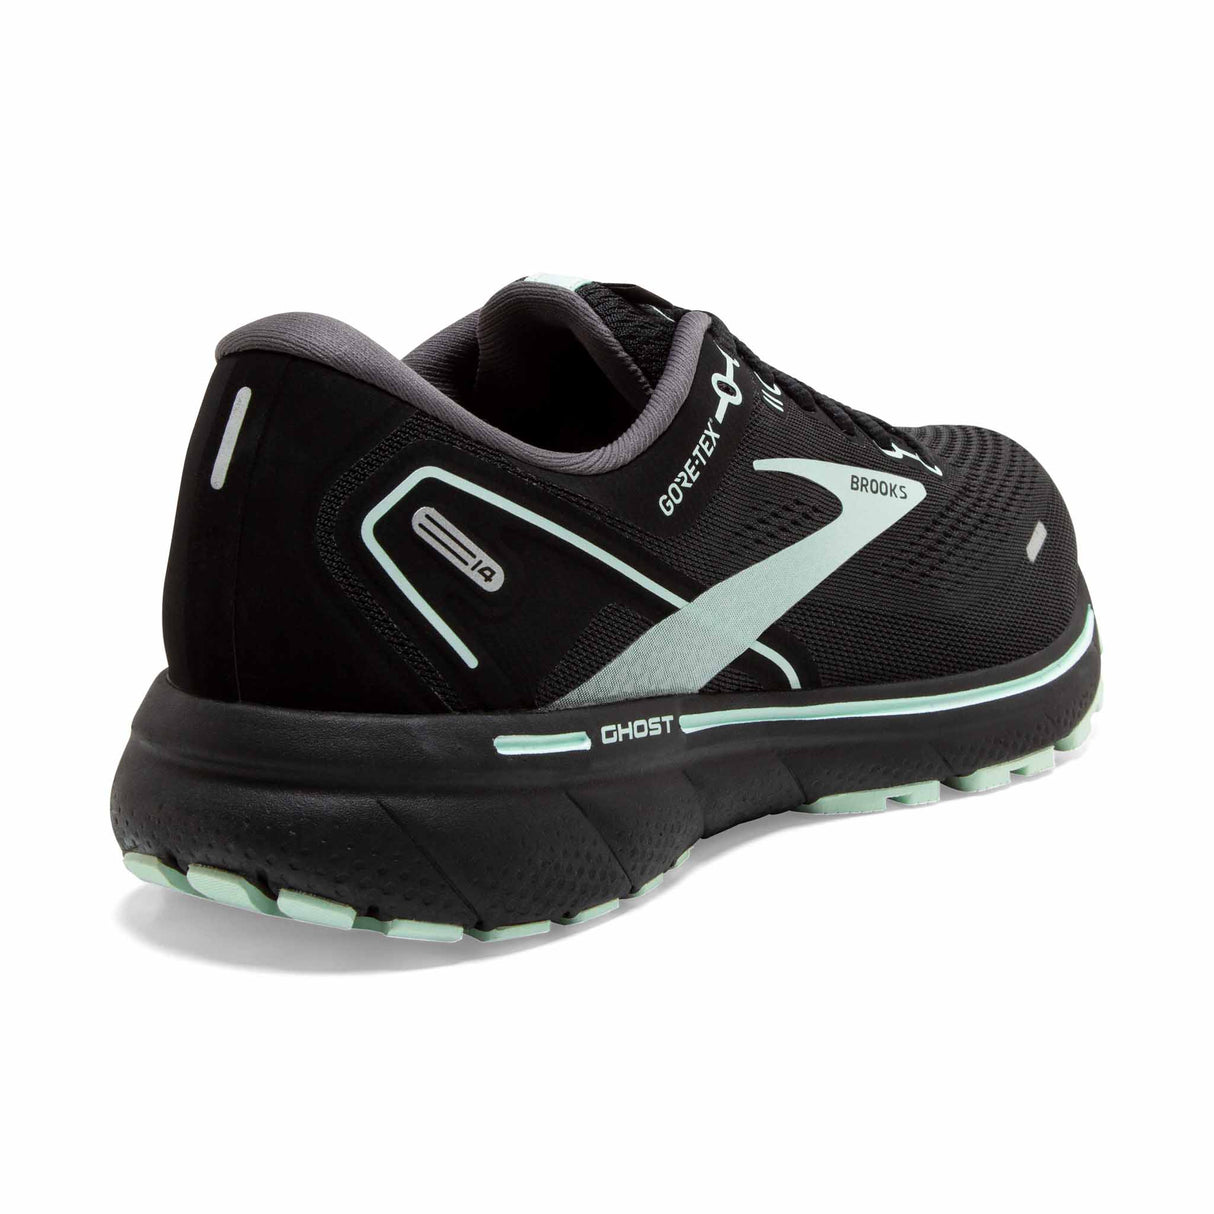 Brooks Ghost 14 GTX chaussures de course à pied pour femme - Black / Blackened Pearl / Aquaglas - Angle 2